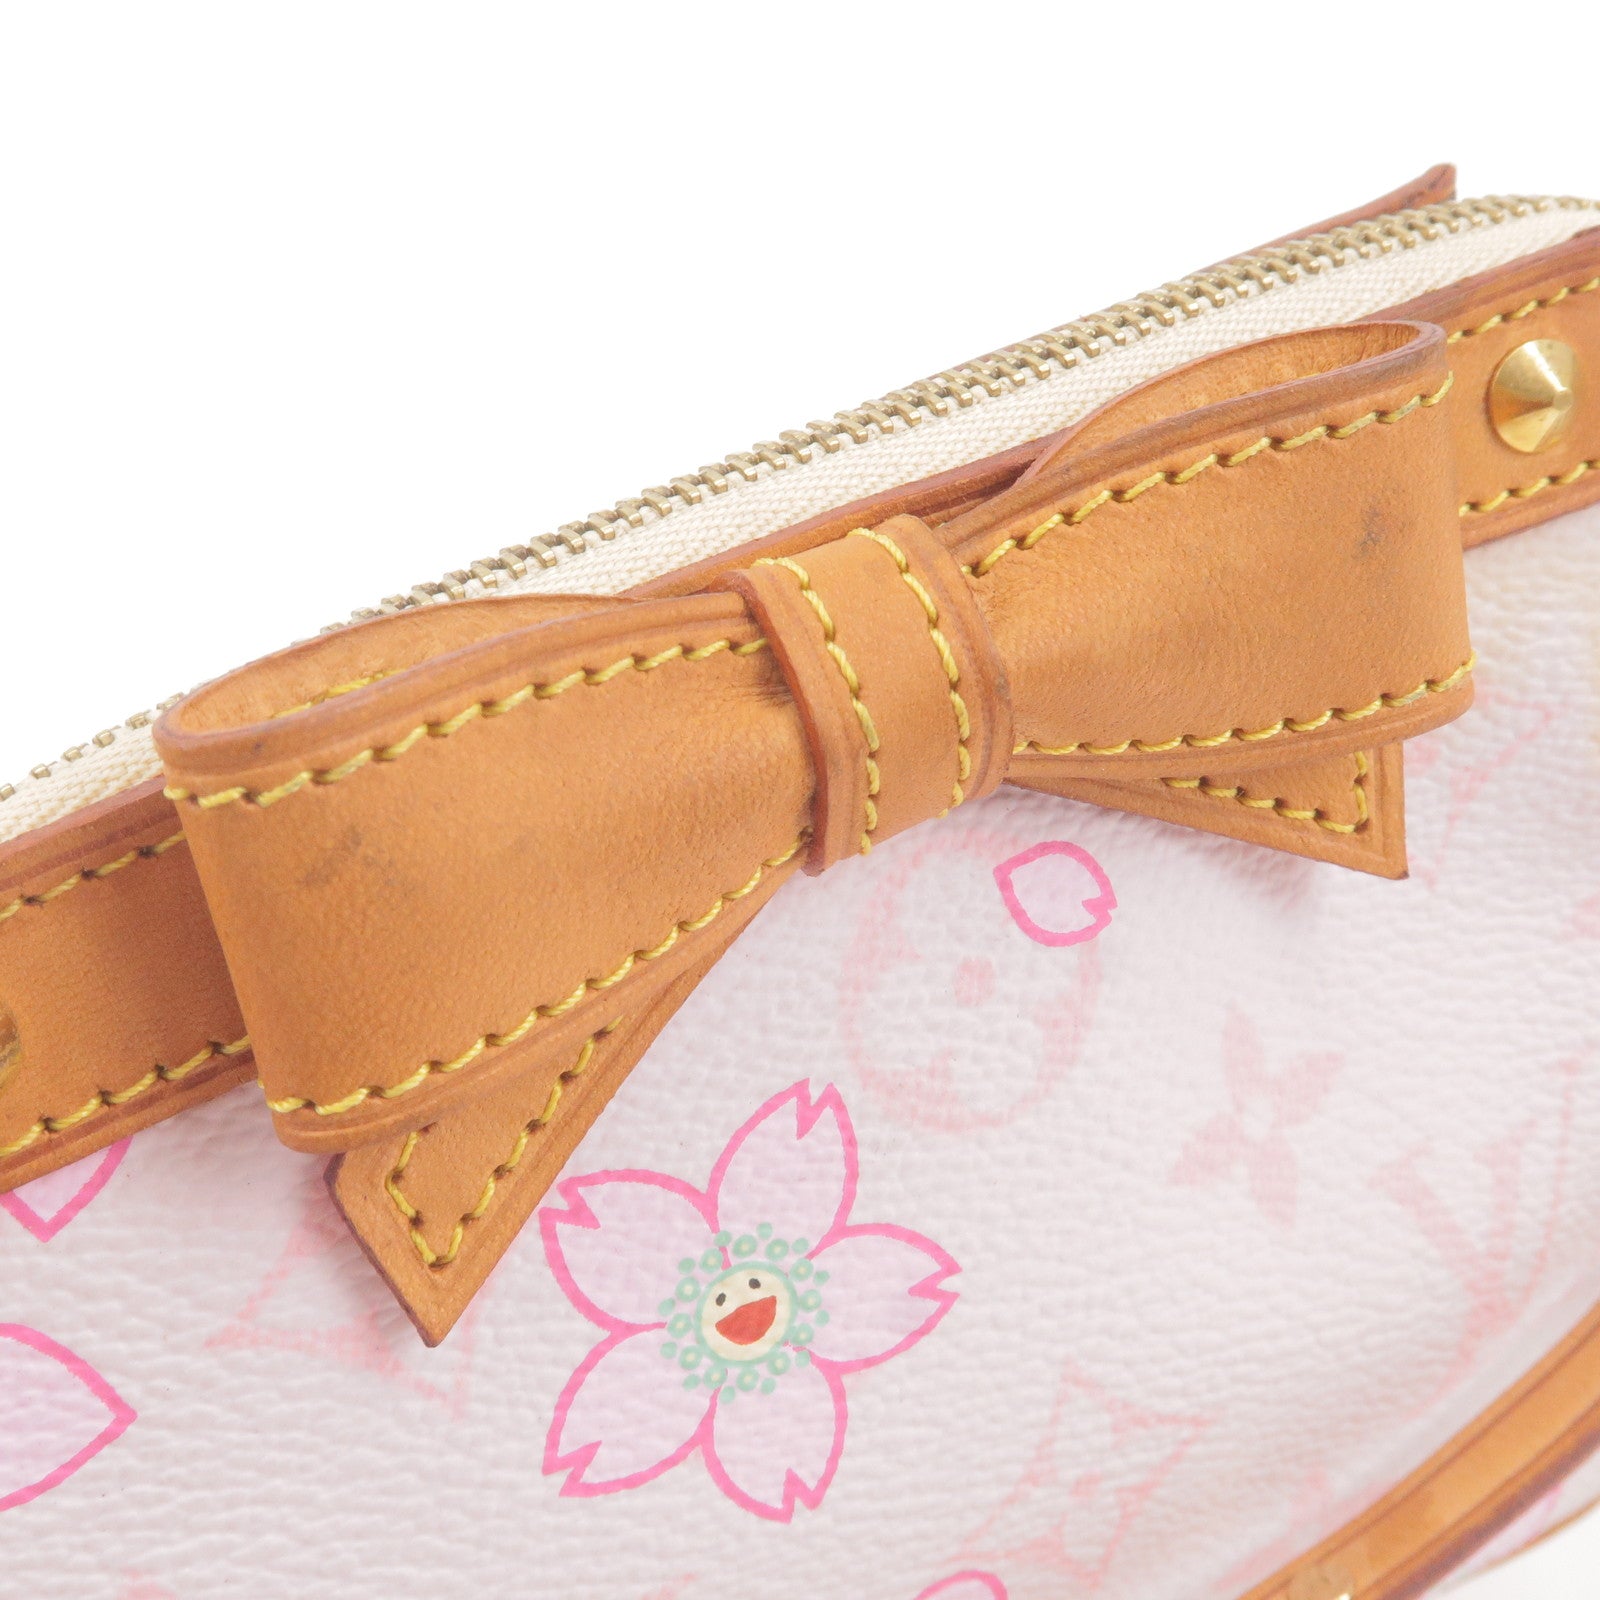 Louis Vuitton Murakami Pink Cherry Blossom Pochette Accessoires at